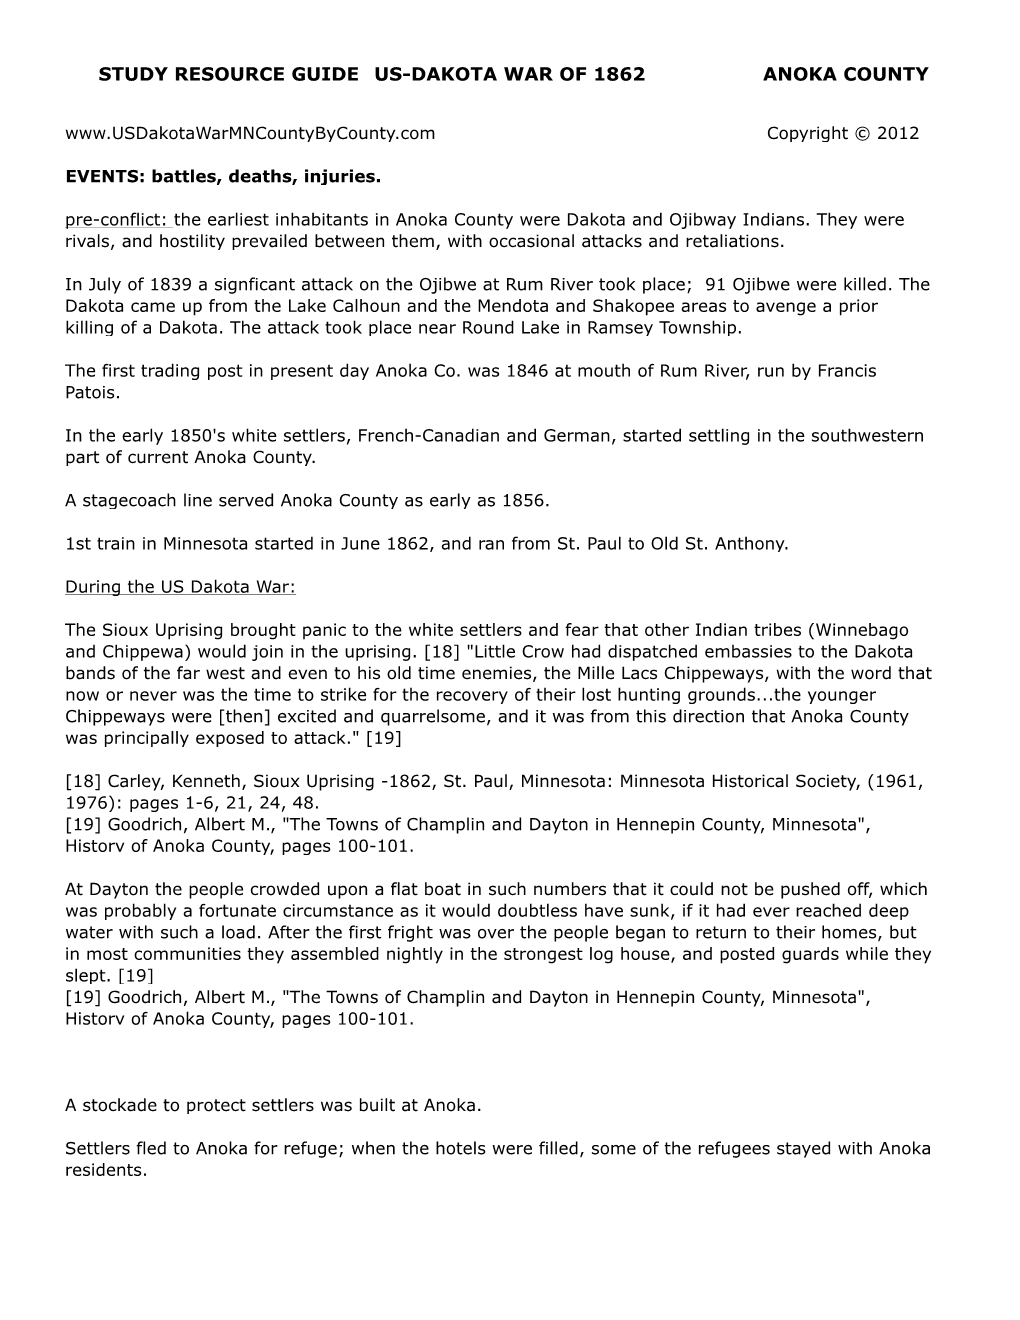 STUDY RESOURCE GUIDE US-DAKOTA WAR of 1862 ANOKA COUNTY Copyright © 2012